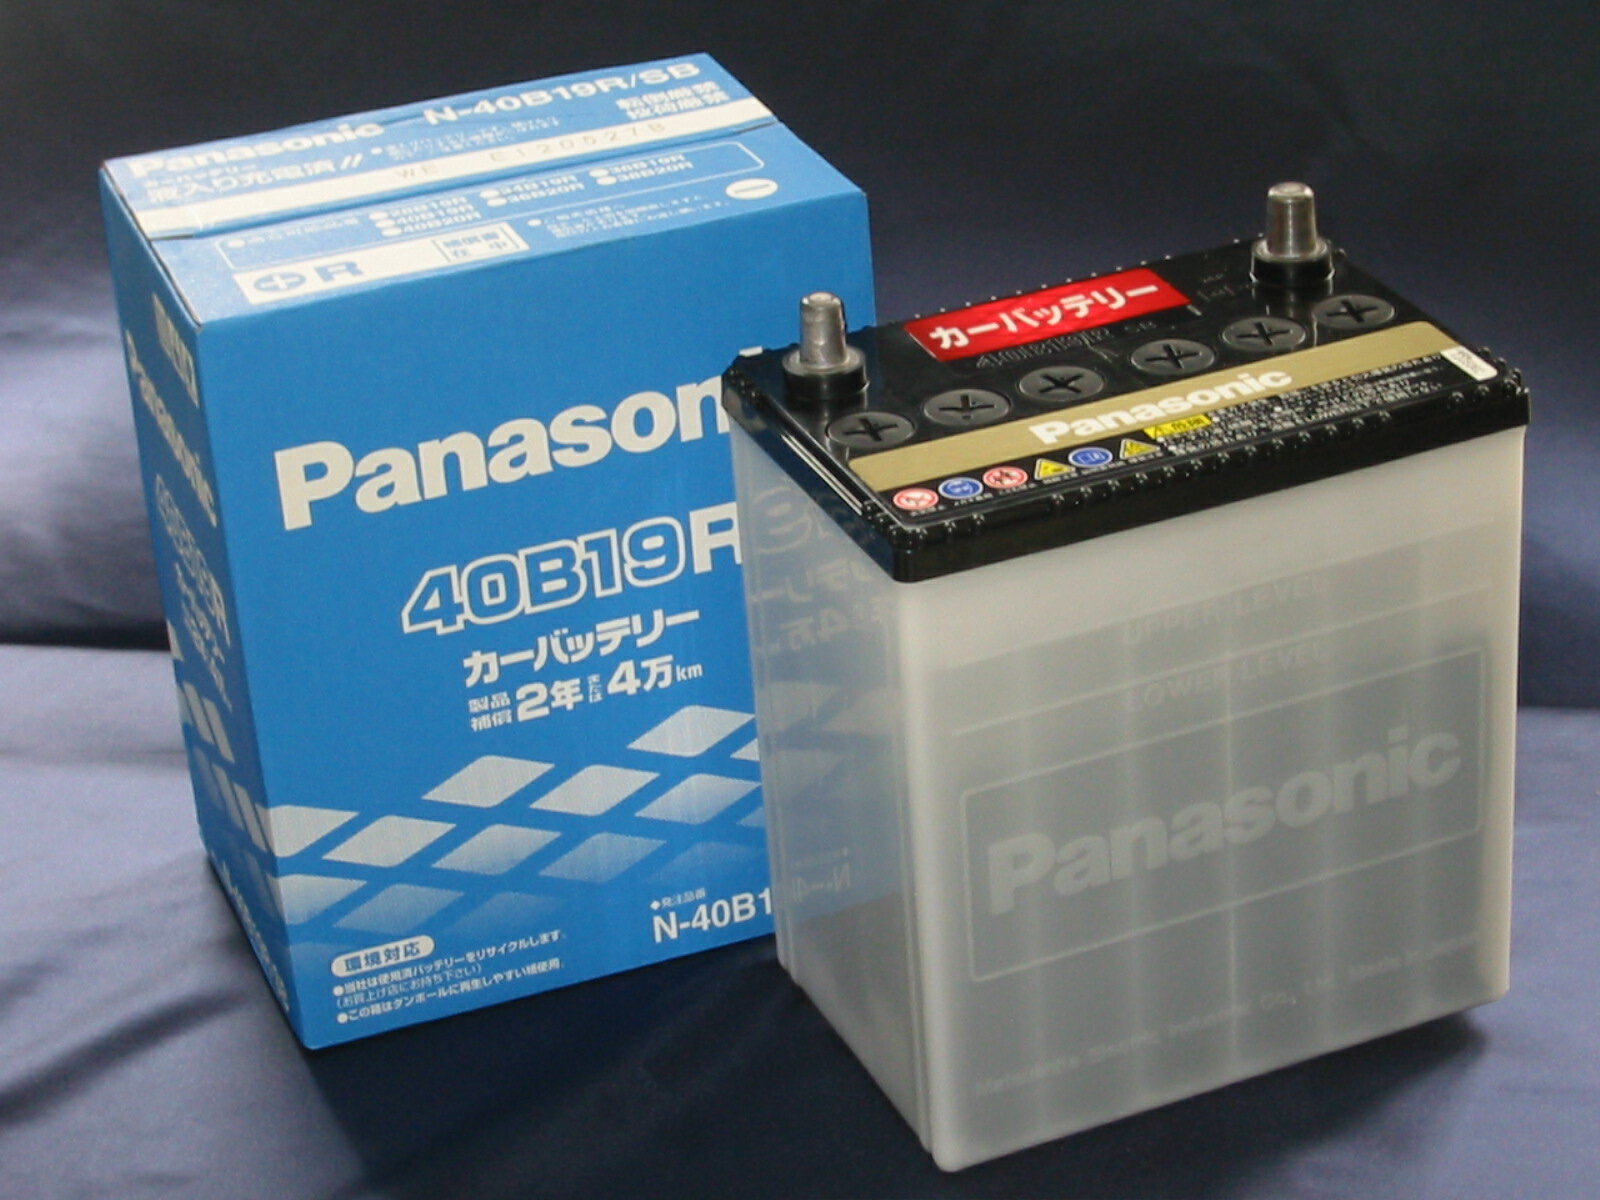 Panasonic 40B 19R バッテリー